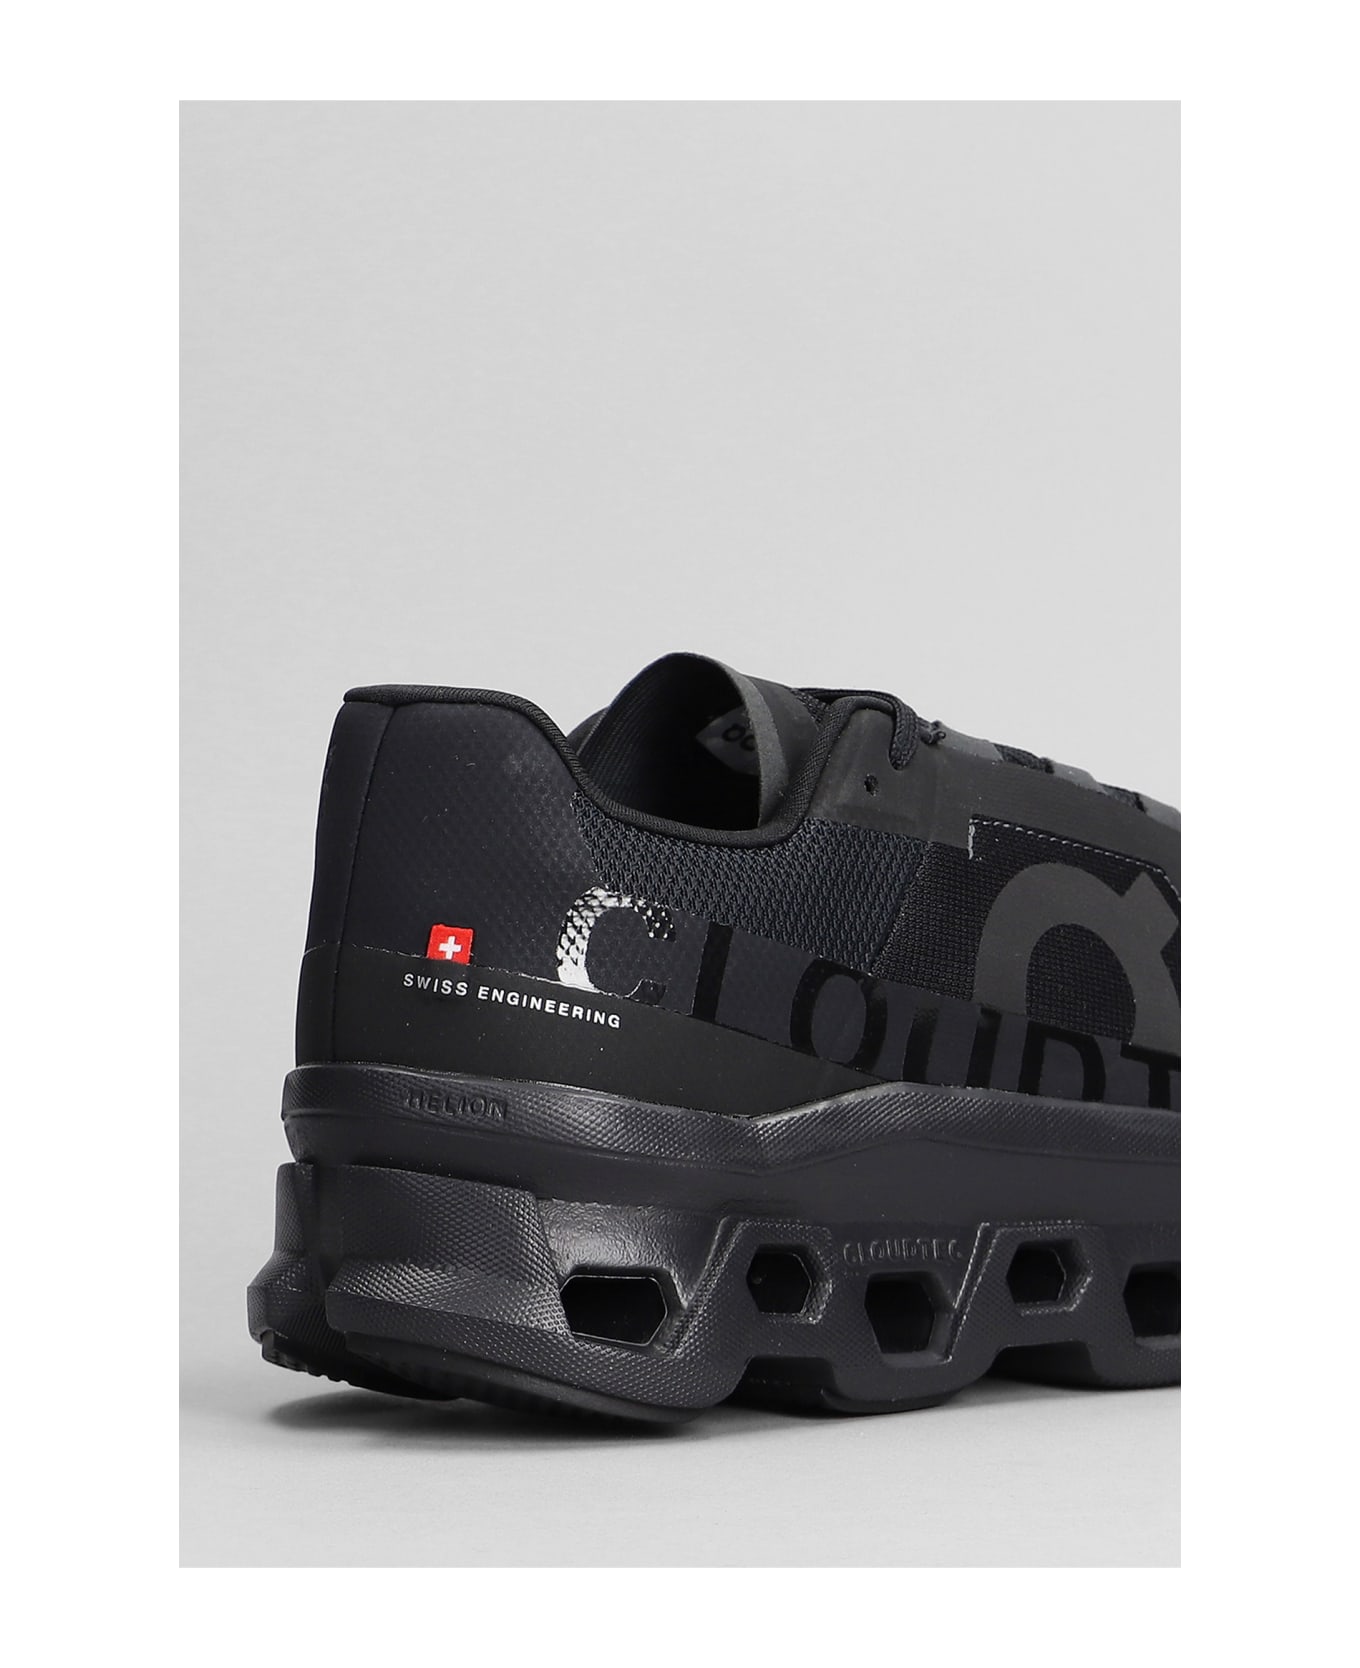 ON Cloudmonster Sneakers In Black Polyester - Black